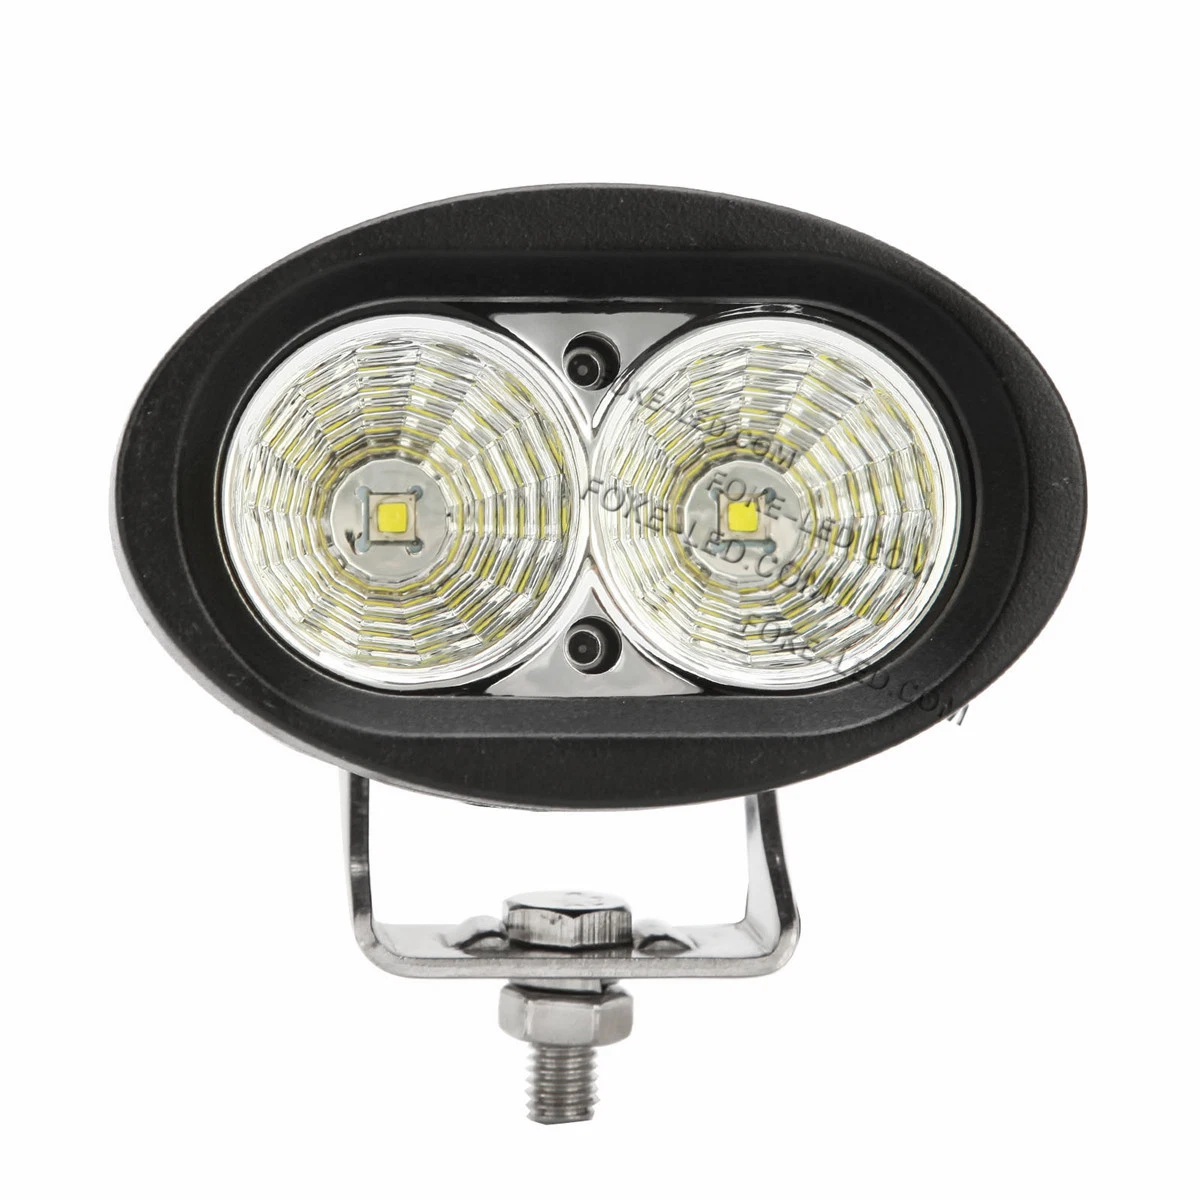 EMC Approved LED Forklift Warning Color Safety Light Point Beam Lamps